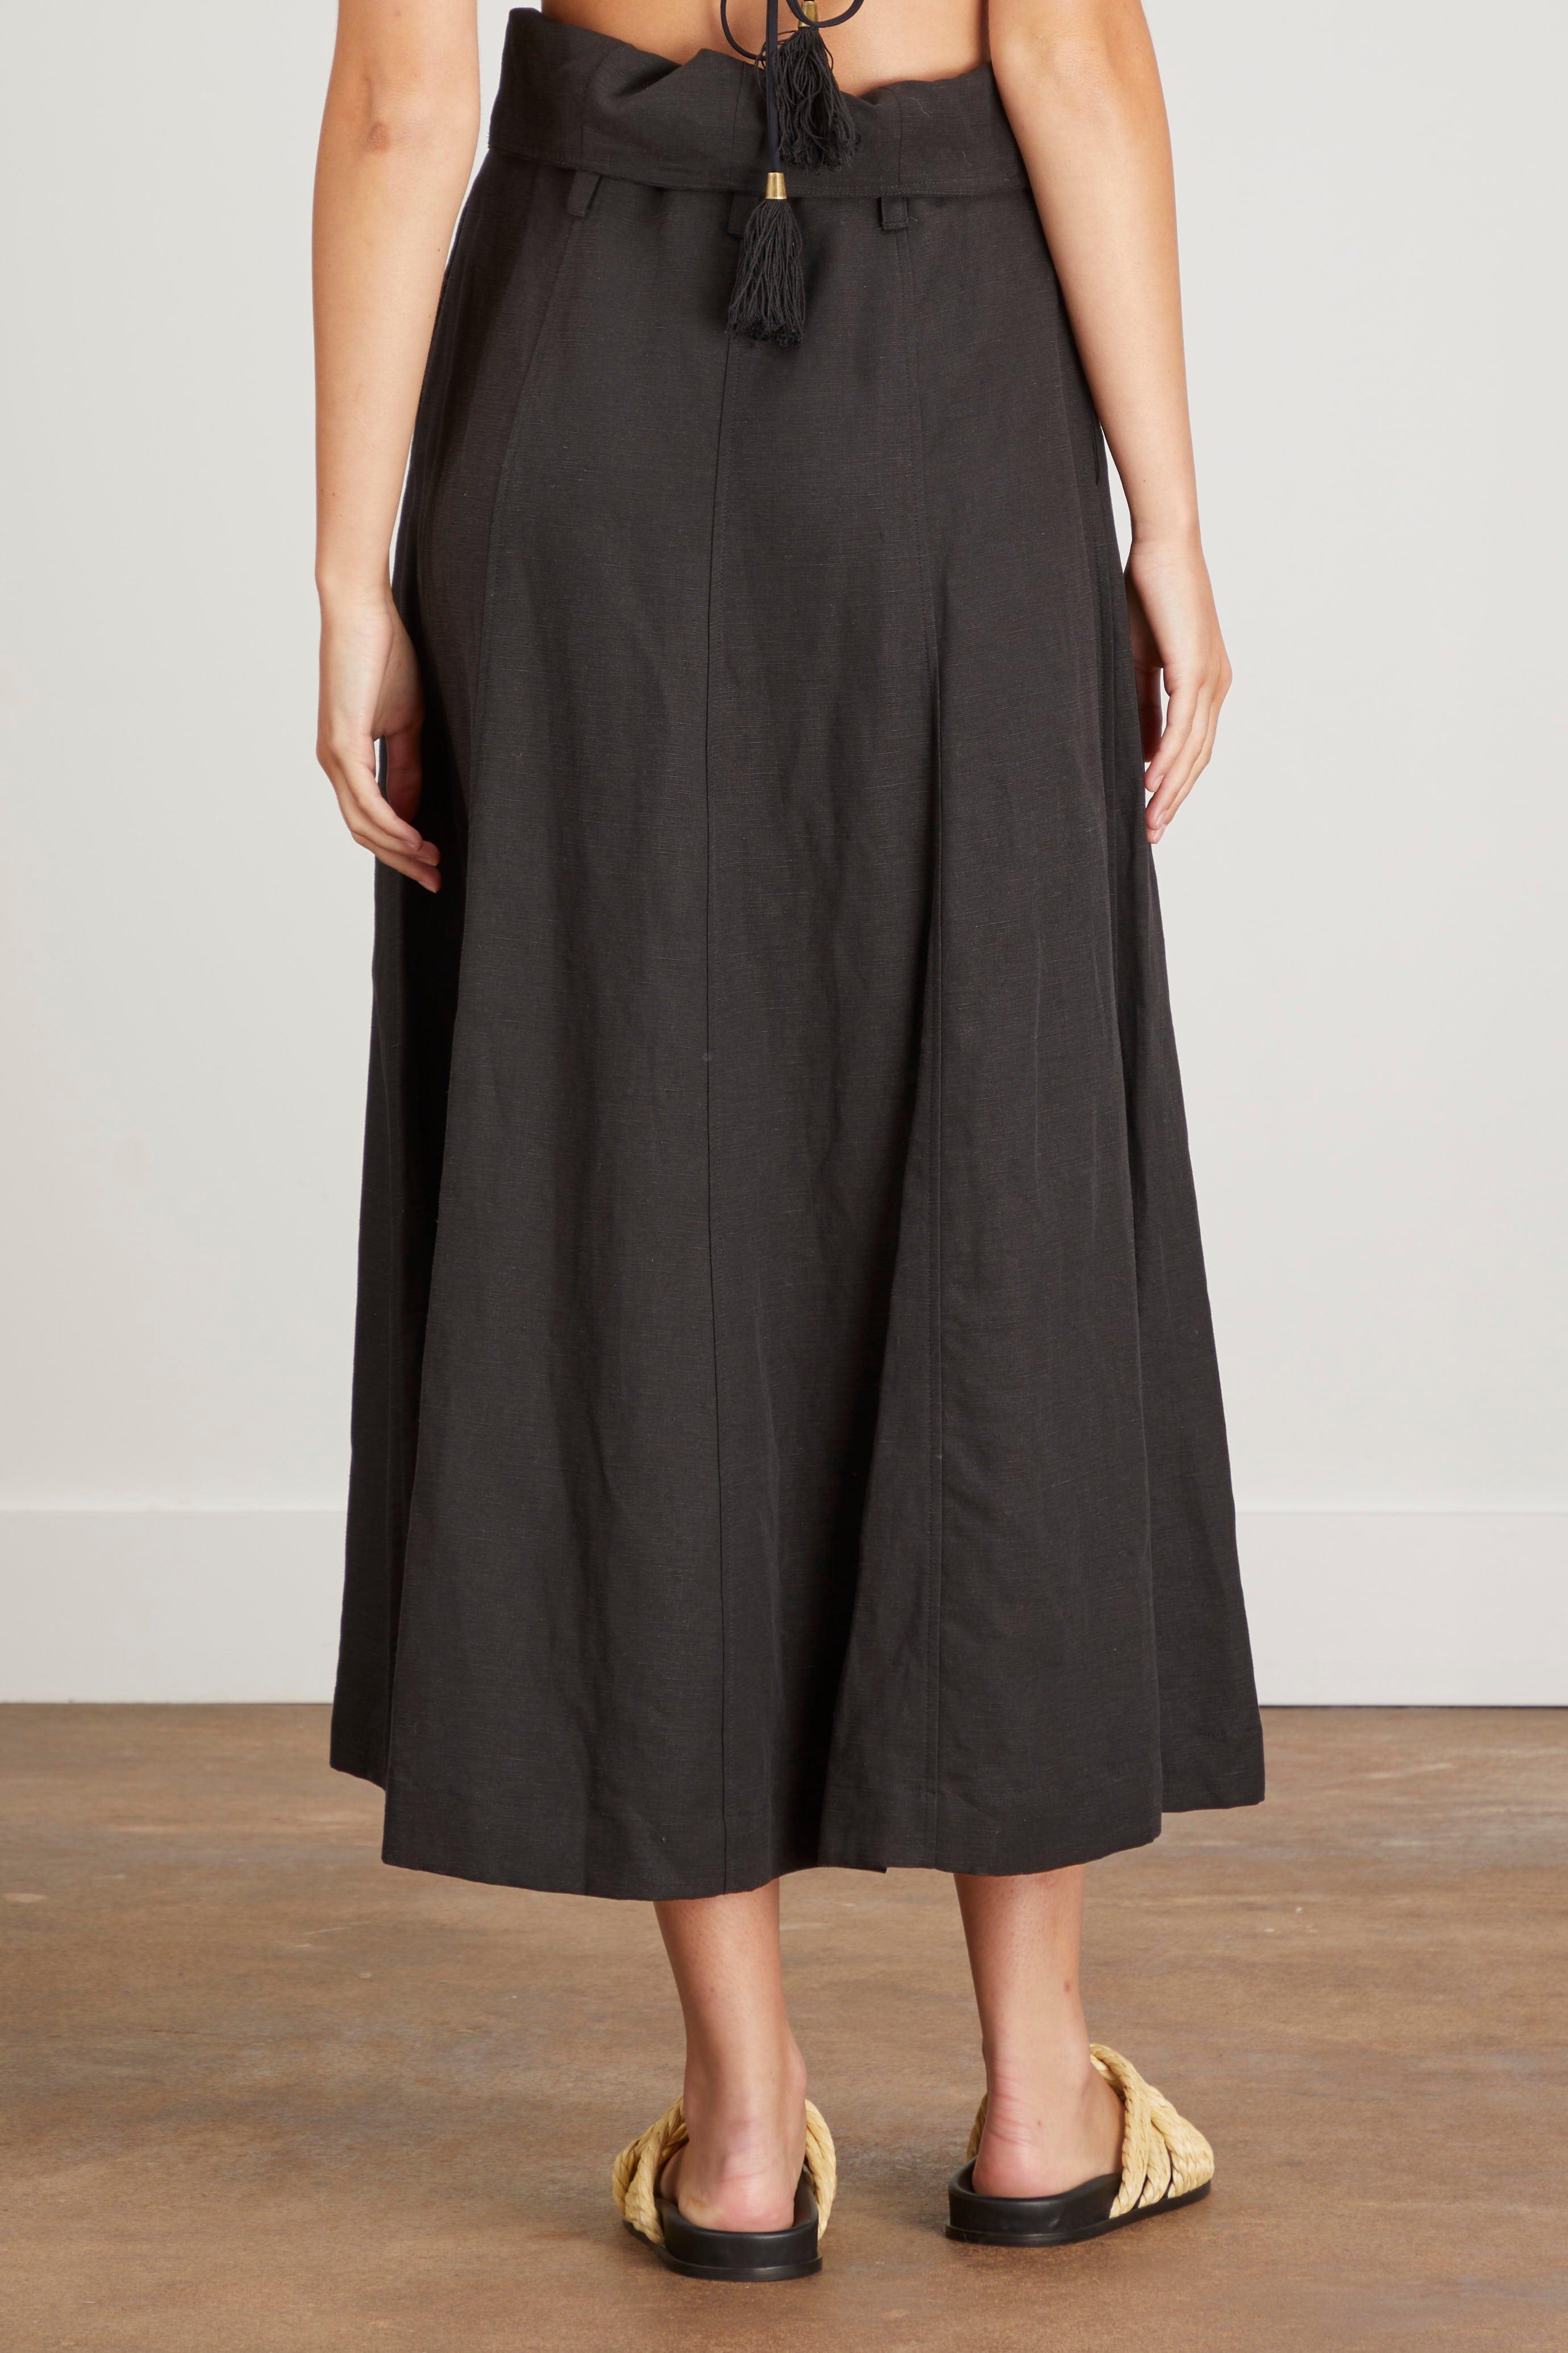 Mara Hoffman Ana Skirt in Black | Lyst